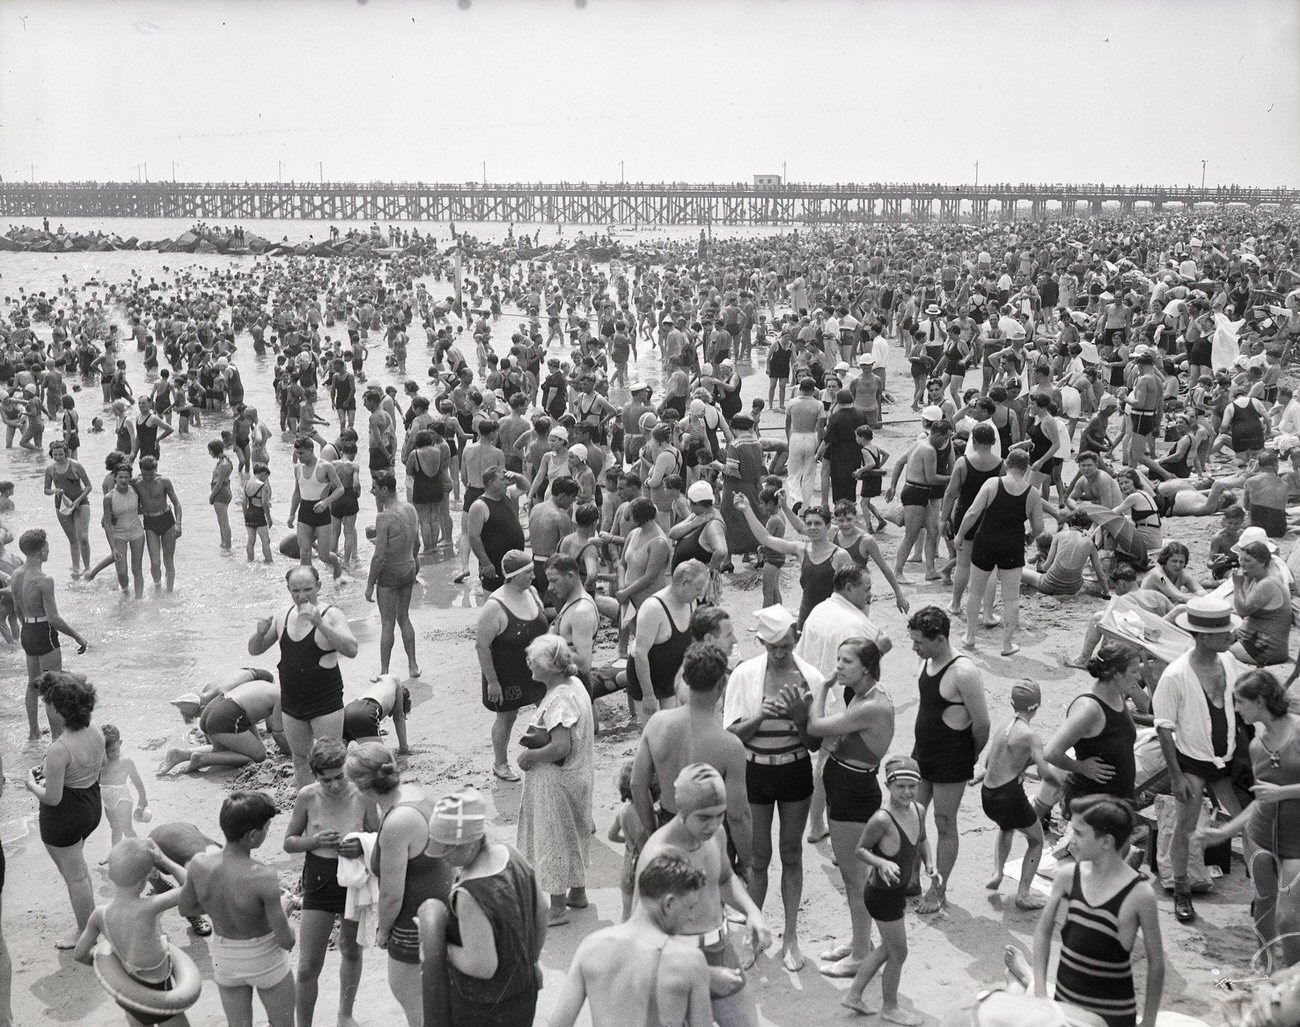 Coney Island Beach Crowd With Boardwalk In Background, August 5, 1935